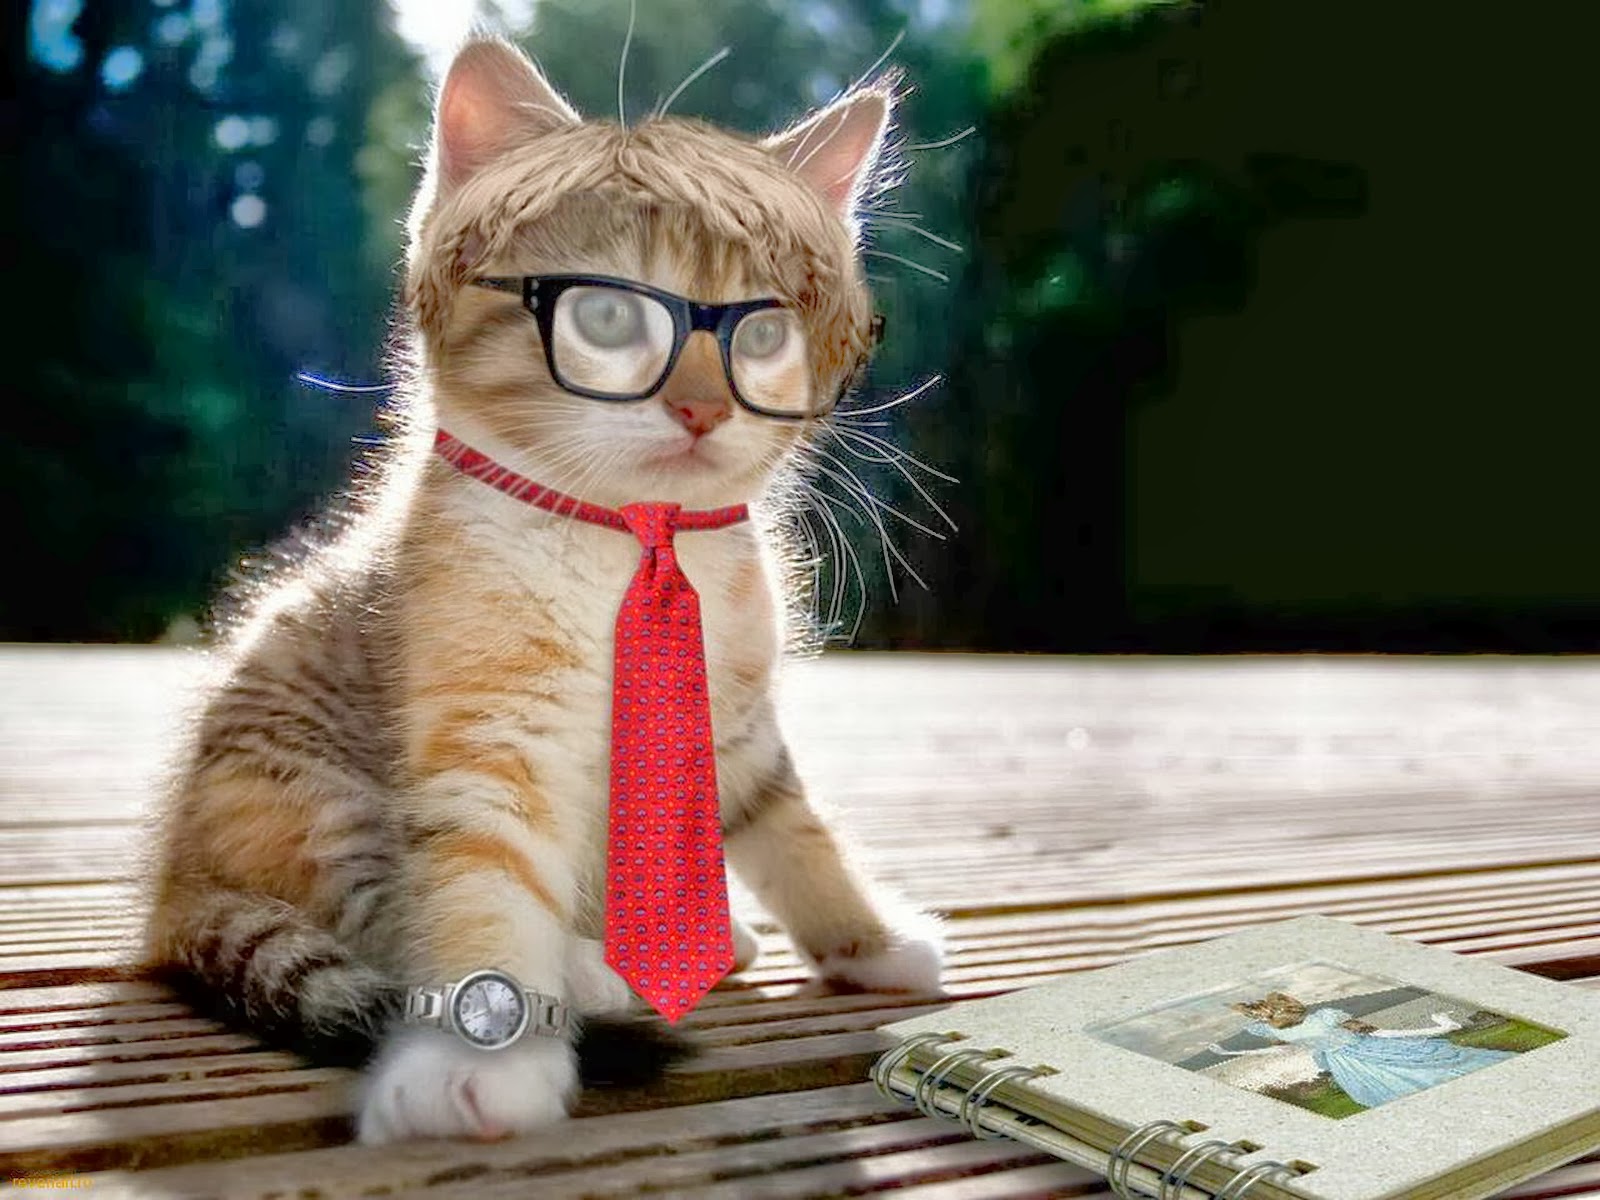 fondos hd: Fondo de Pantalla Animales gato con gafas